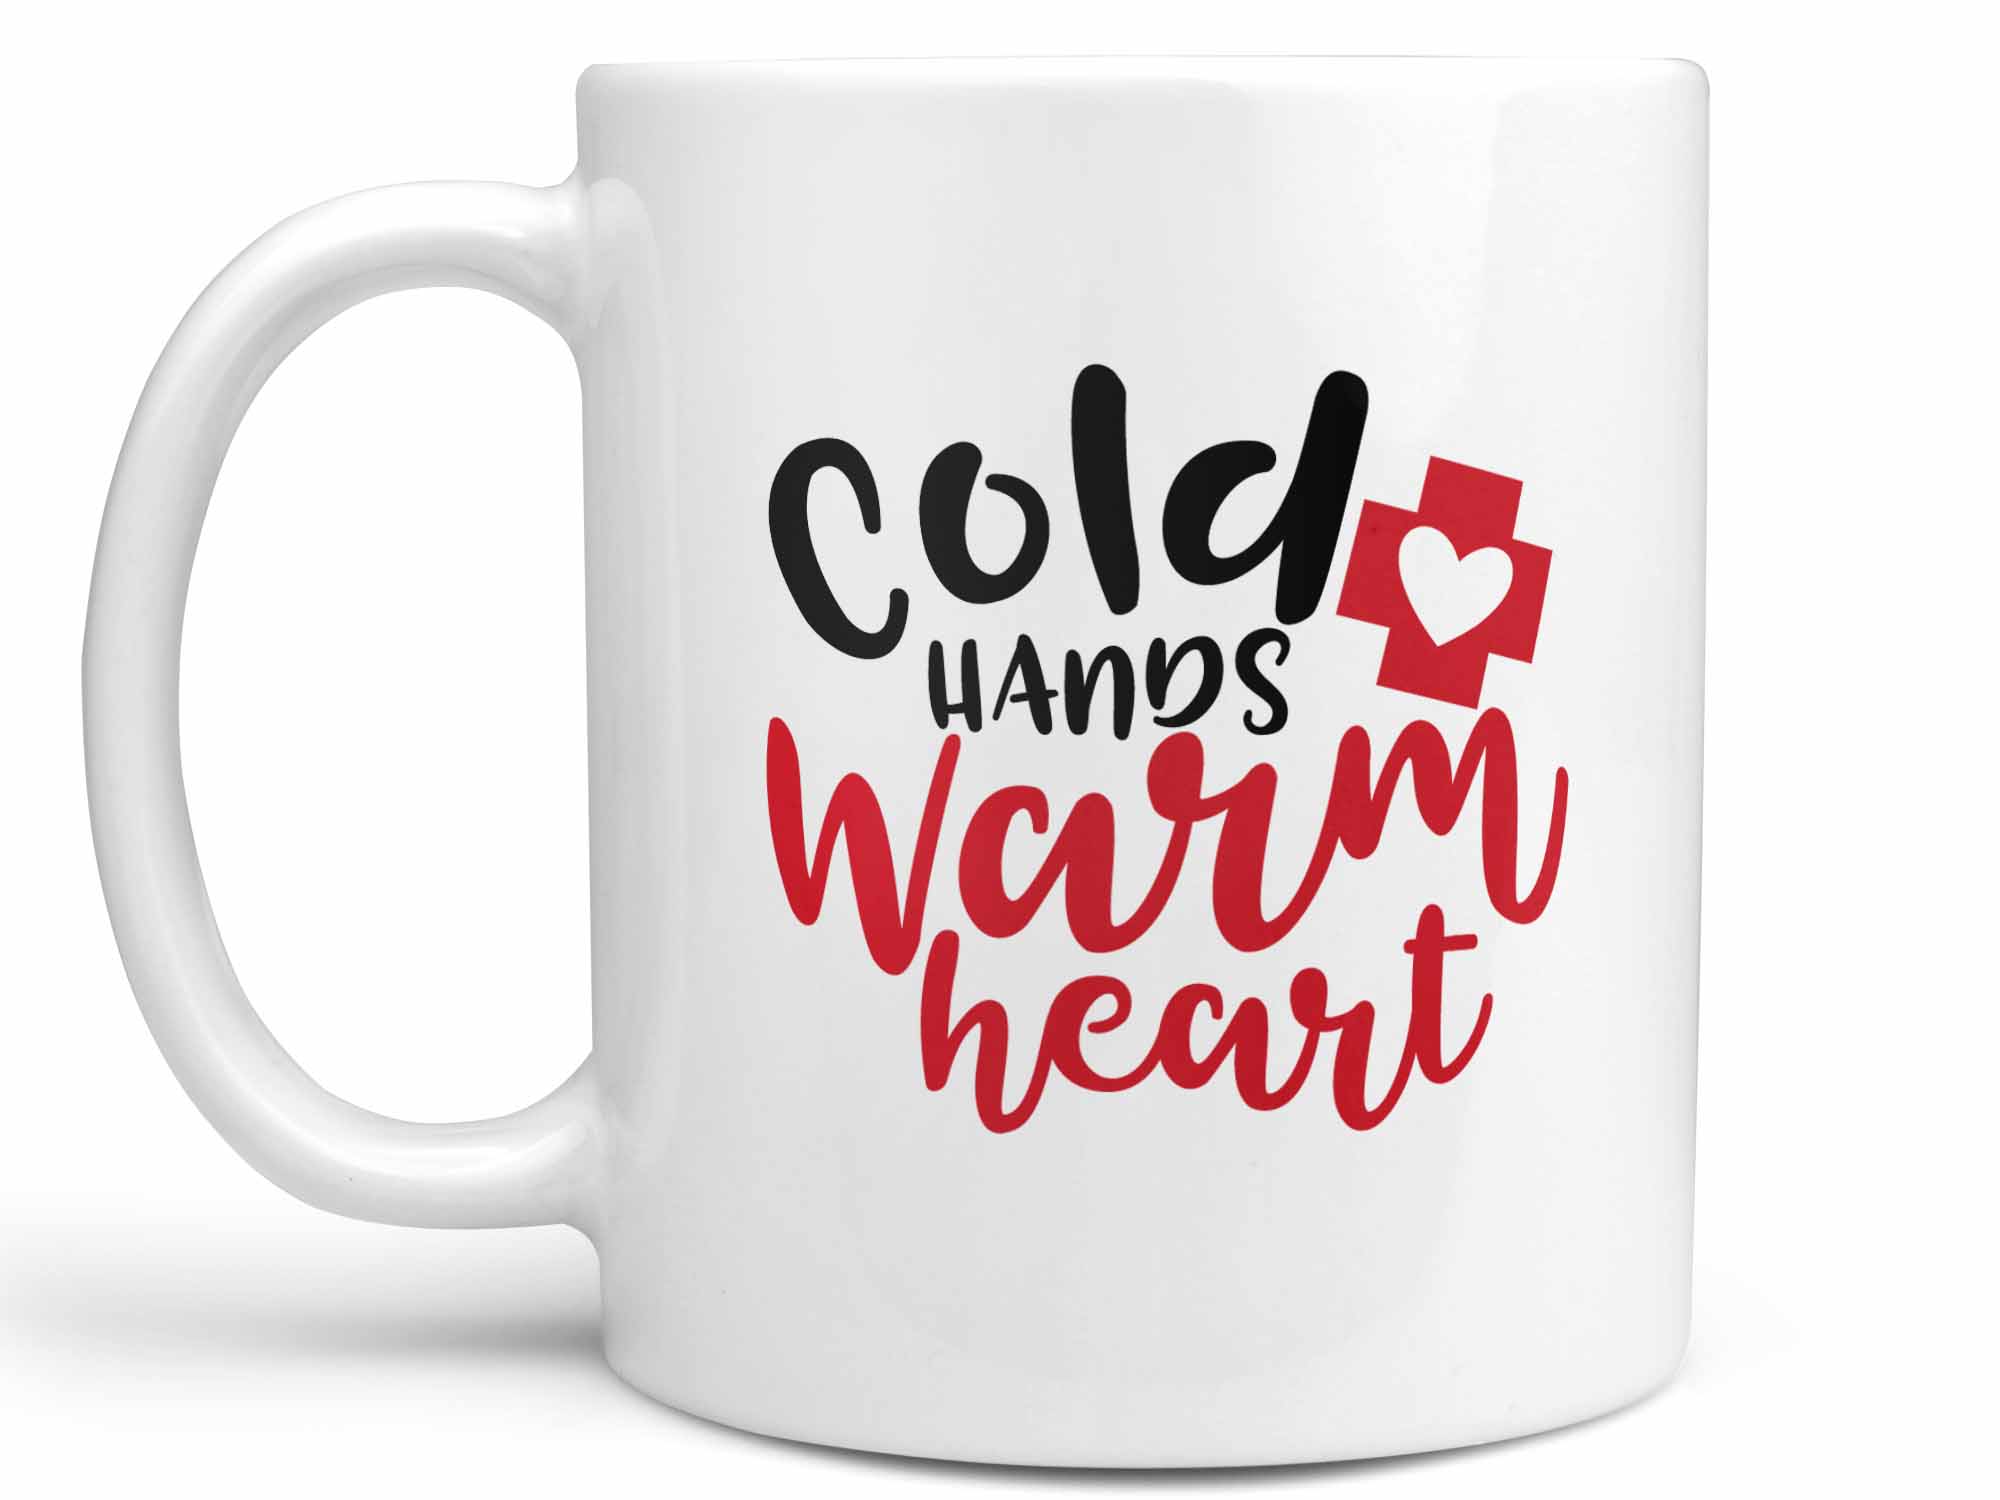 Cold Hands Warm Heart Coffee Mug